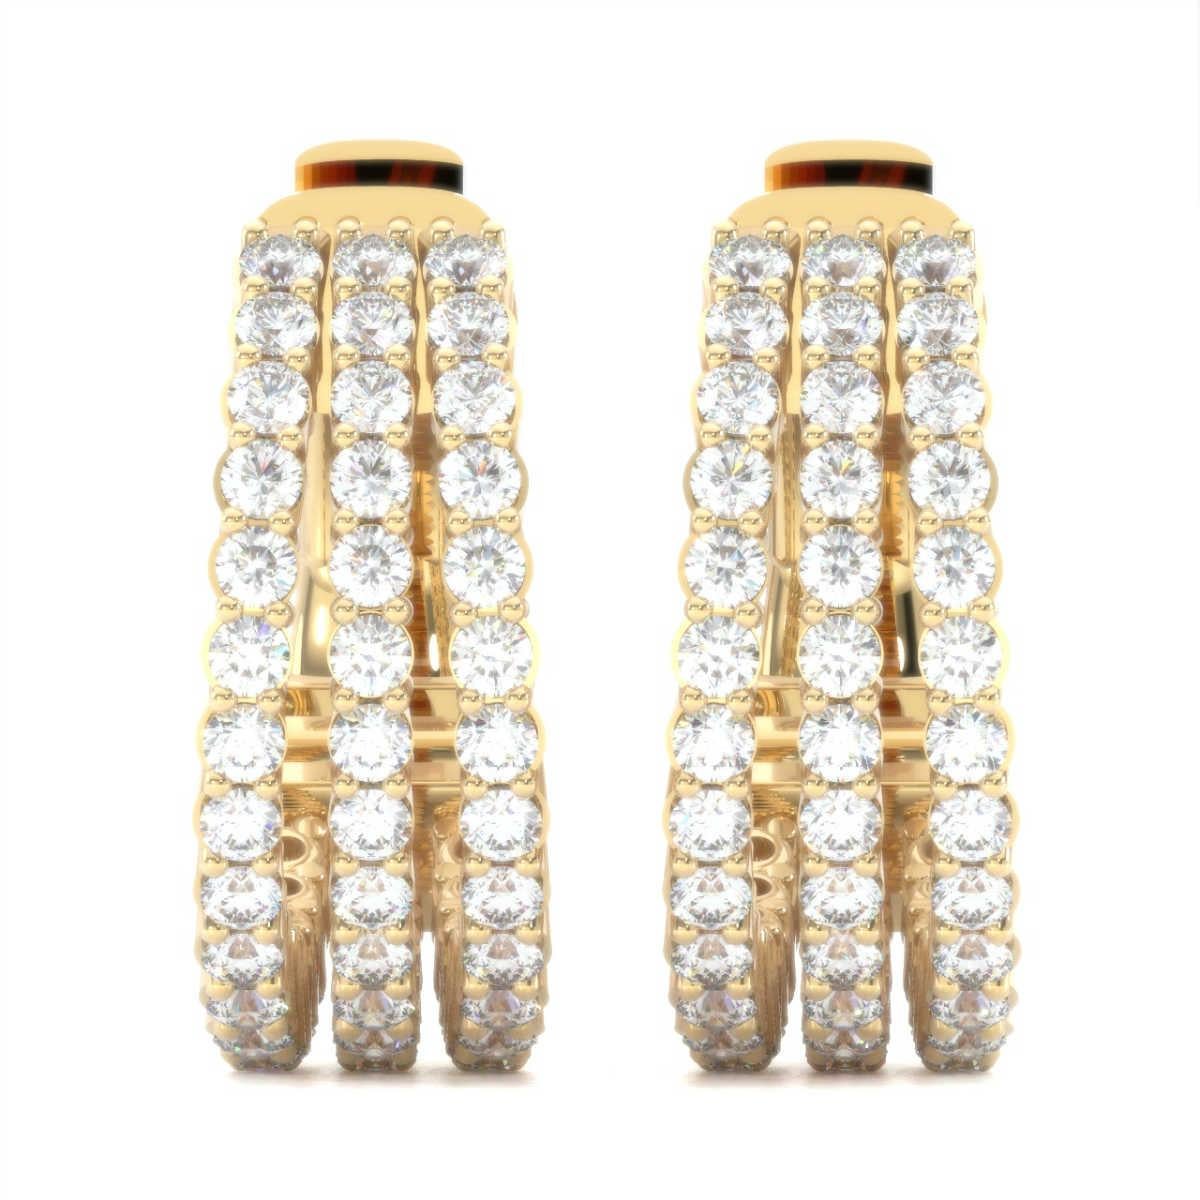 1 carat rose gold diamond earrings